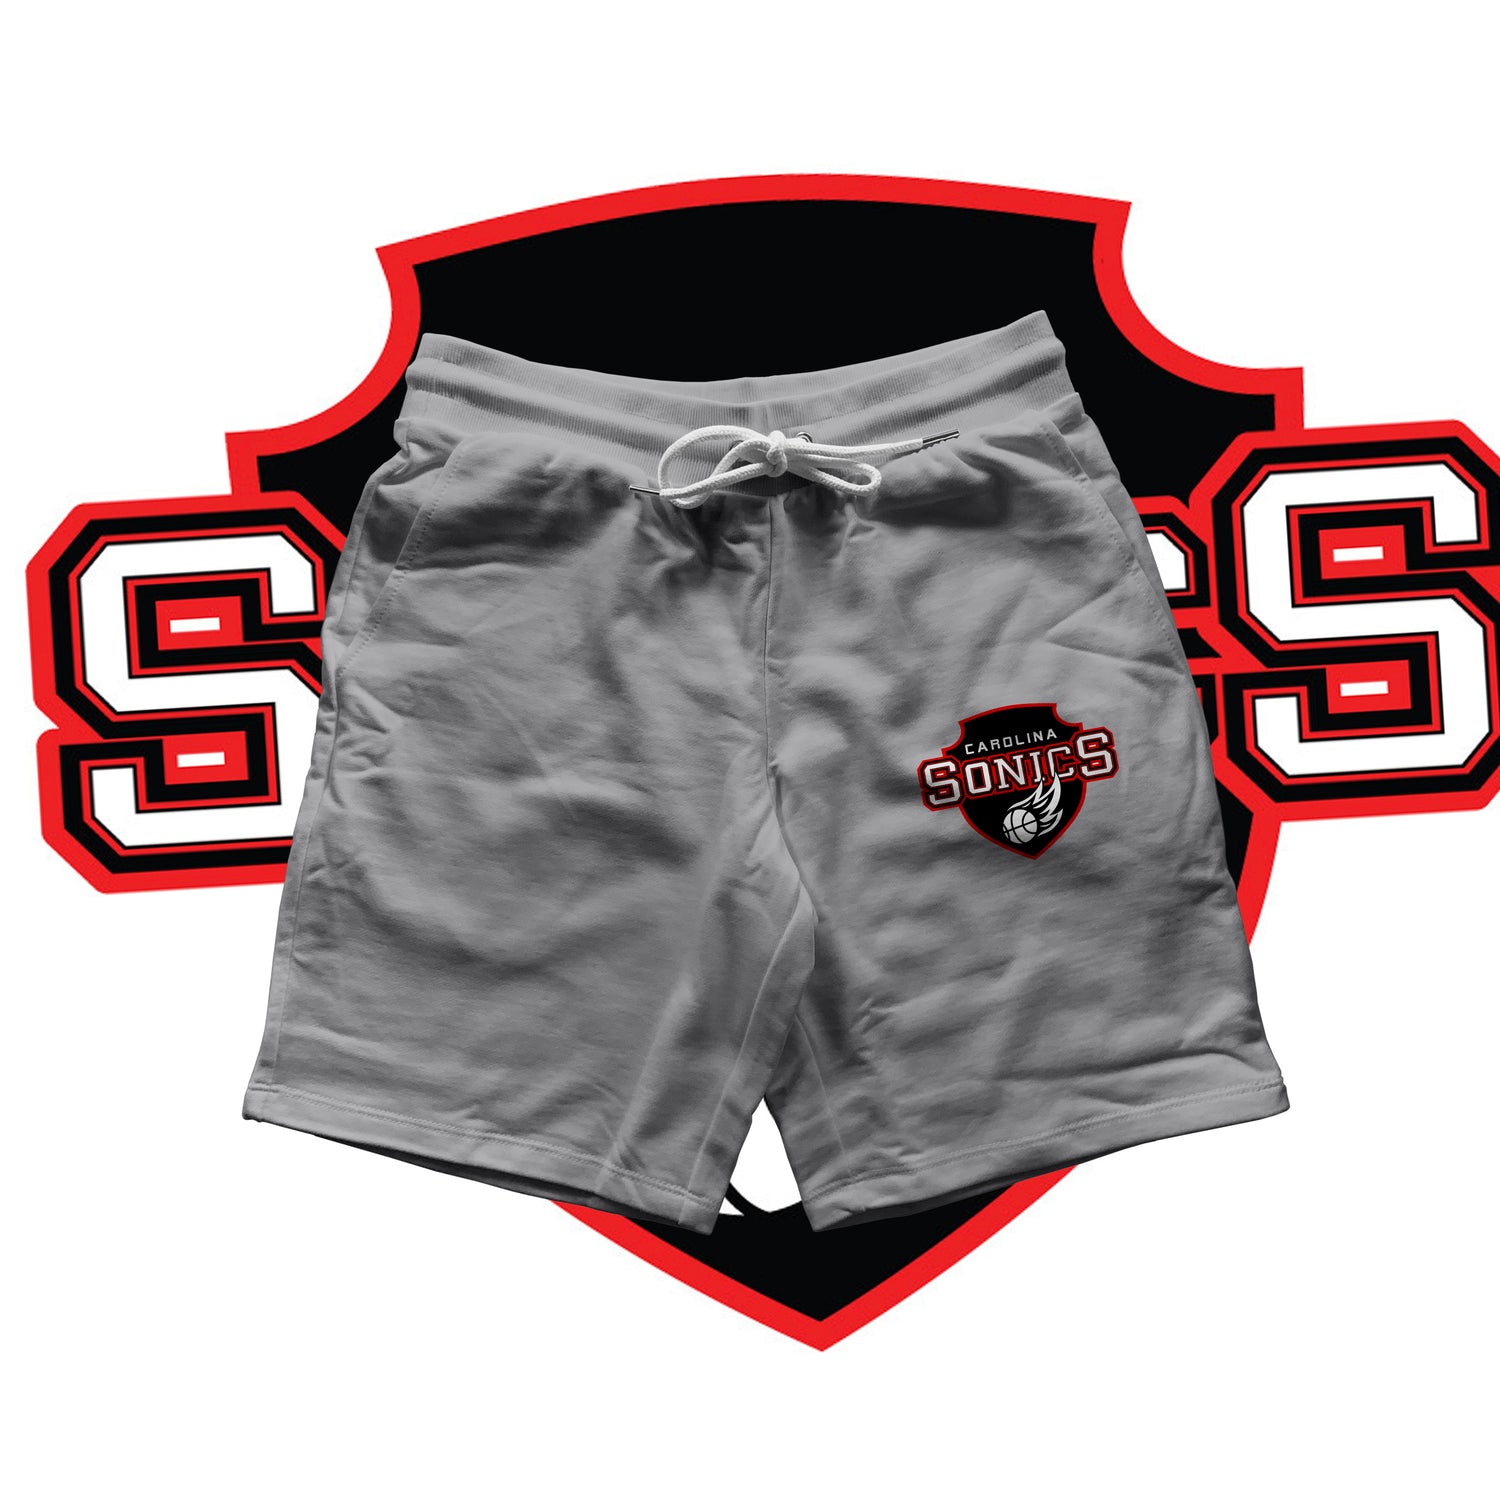 Carolina Sonics Logo Shorts